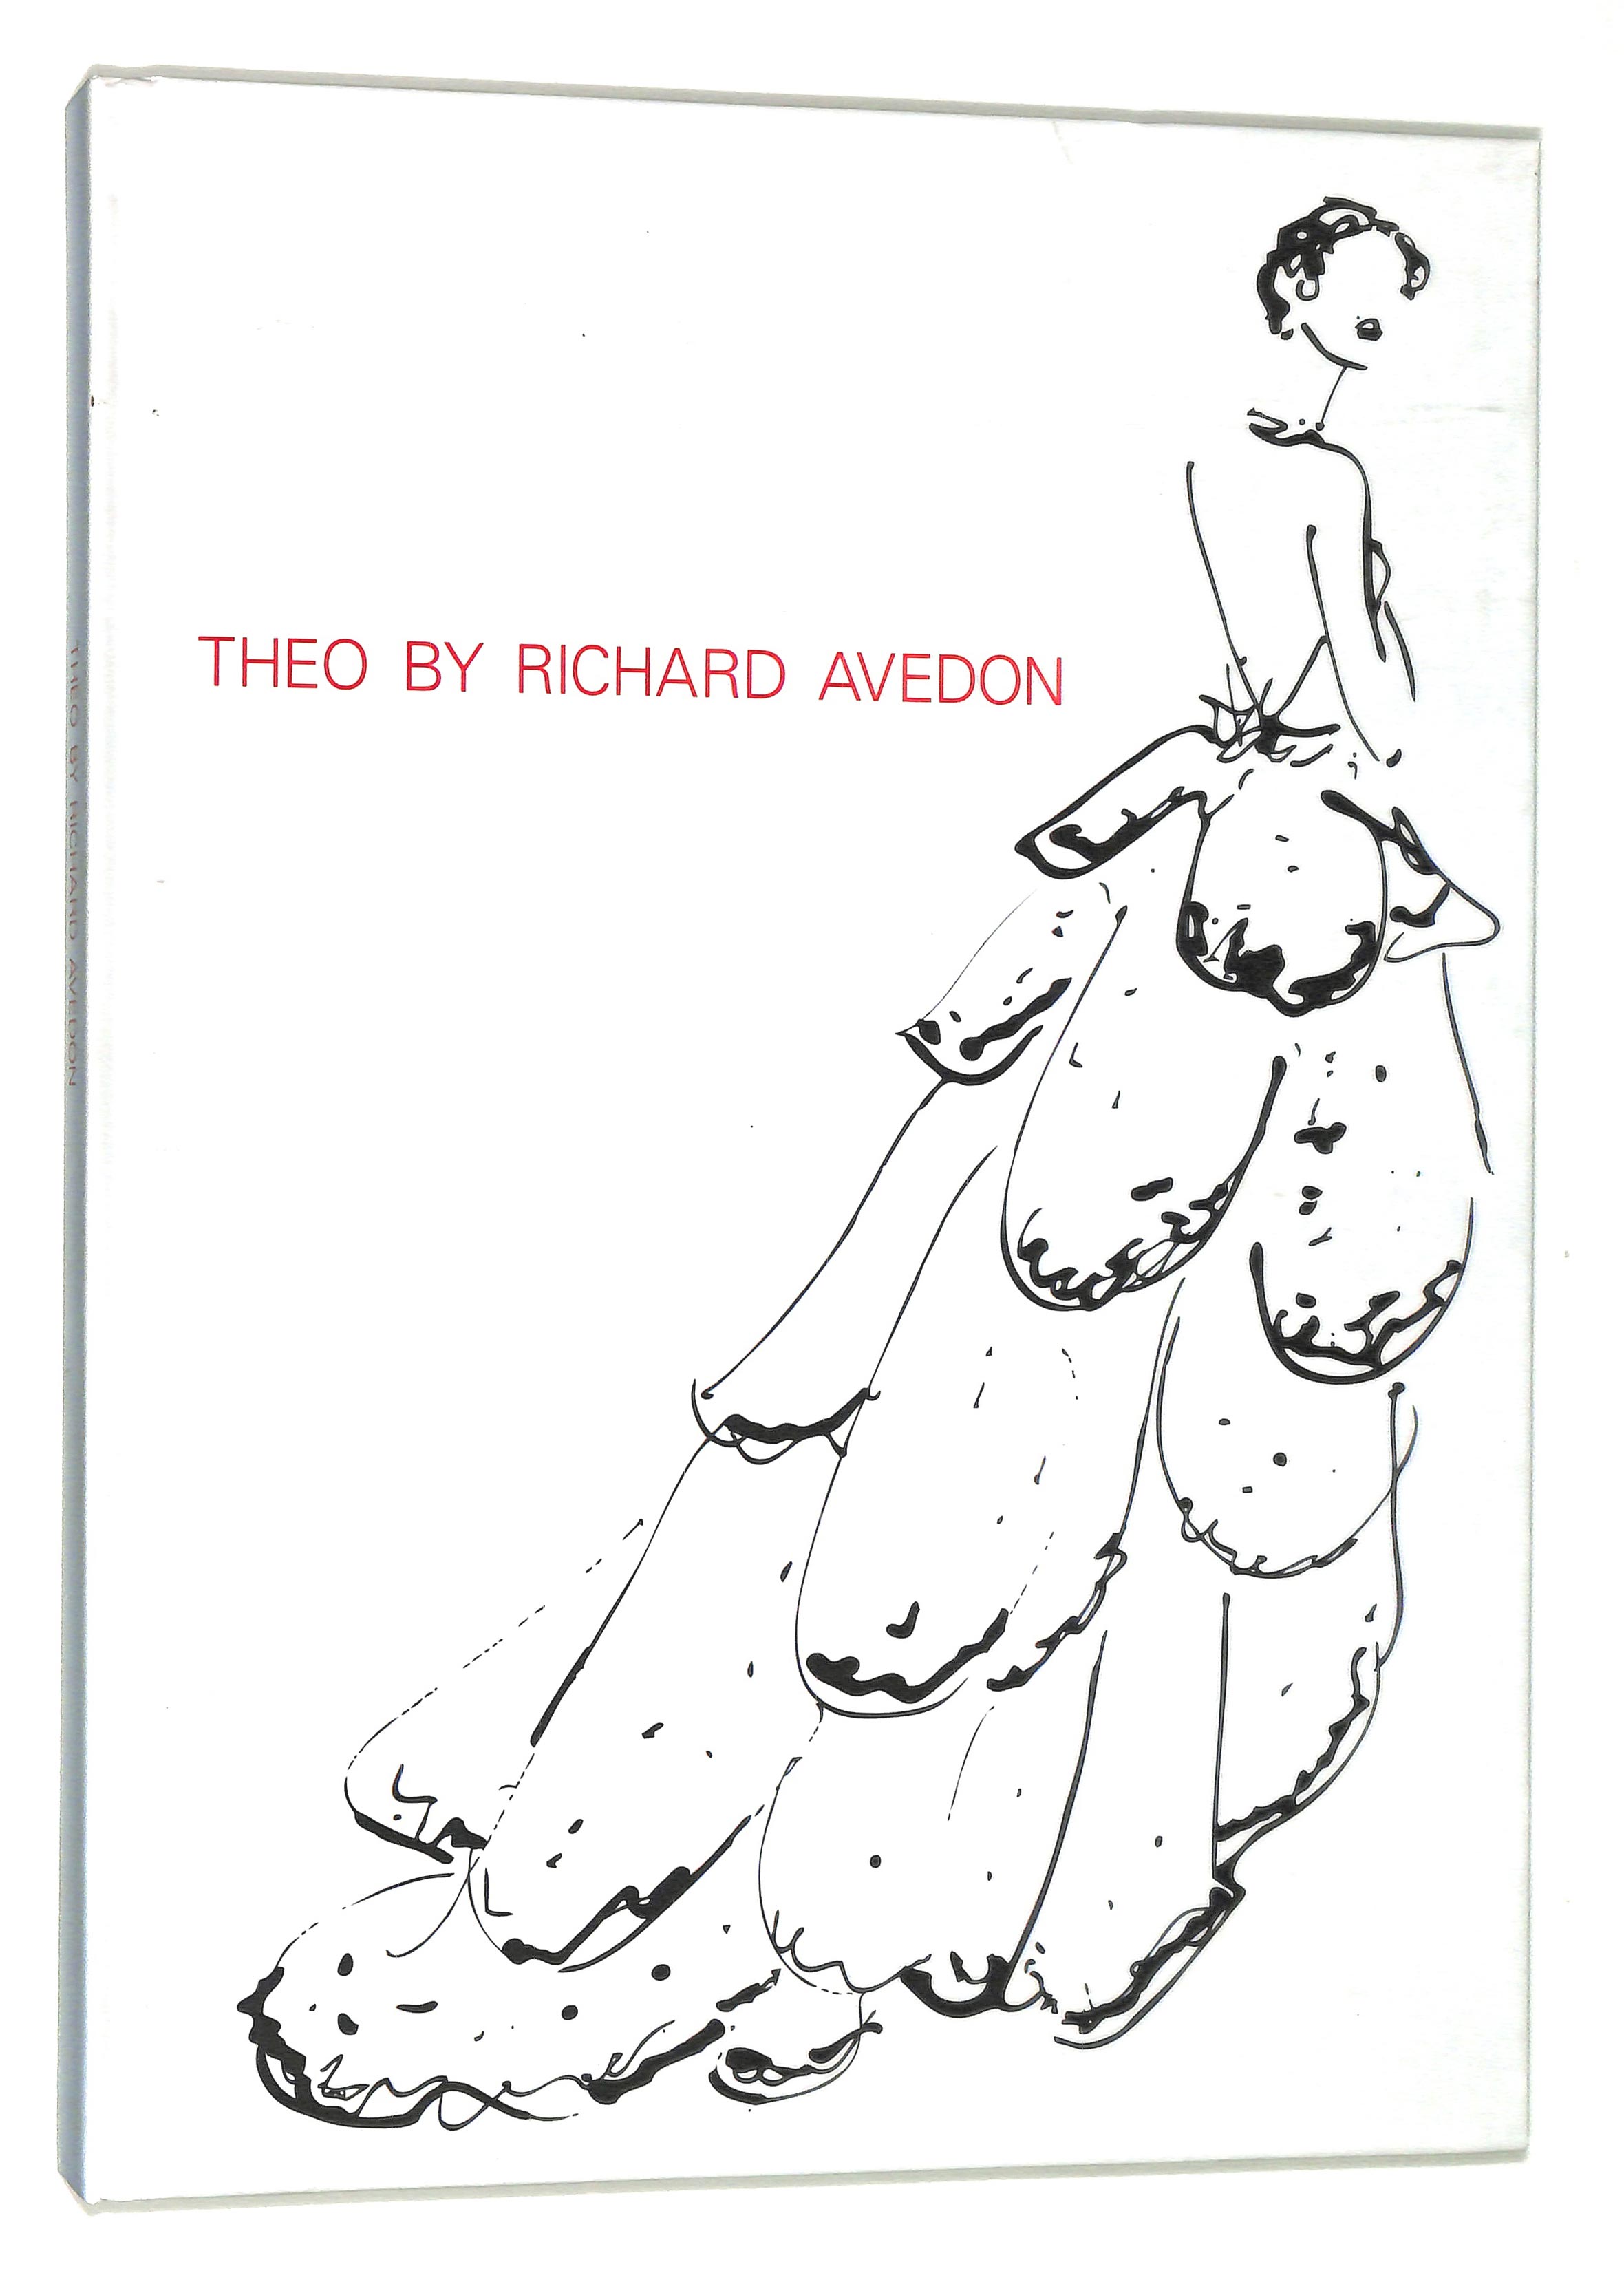 Theo by Richard Avedon